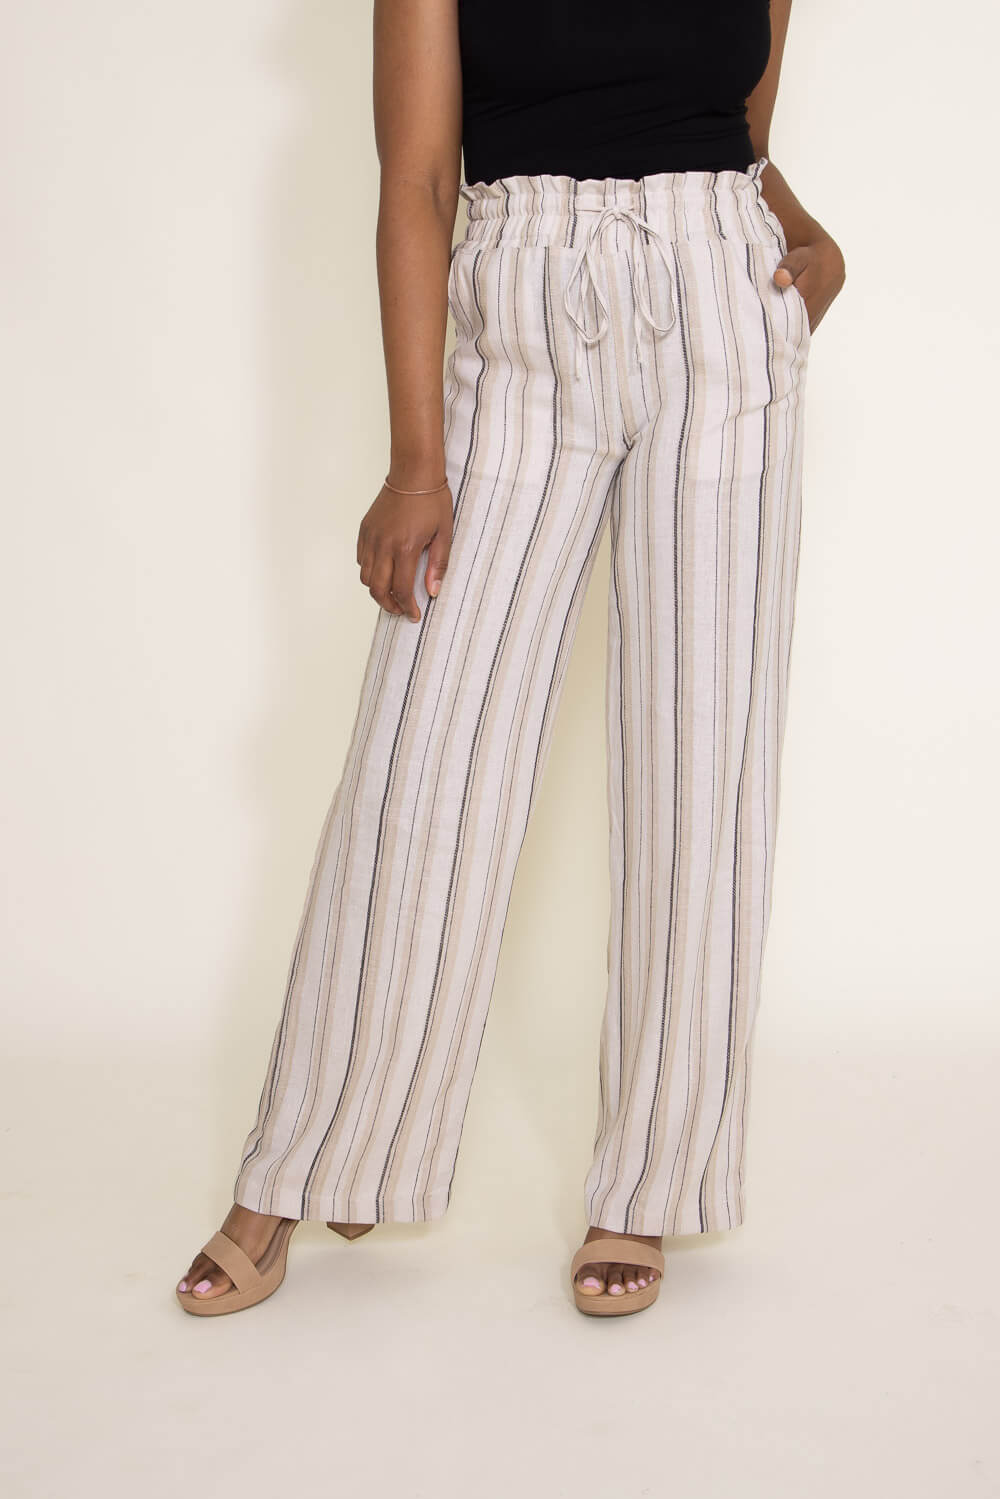 Women's Get Tropical T-Shirt and Striped Pants Pajama Set